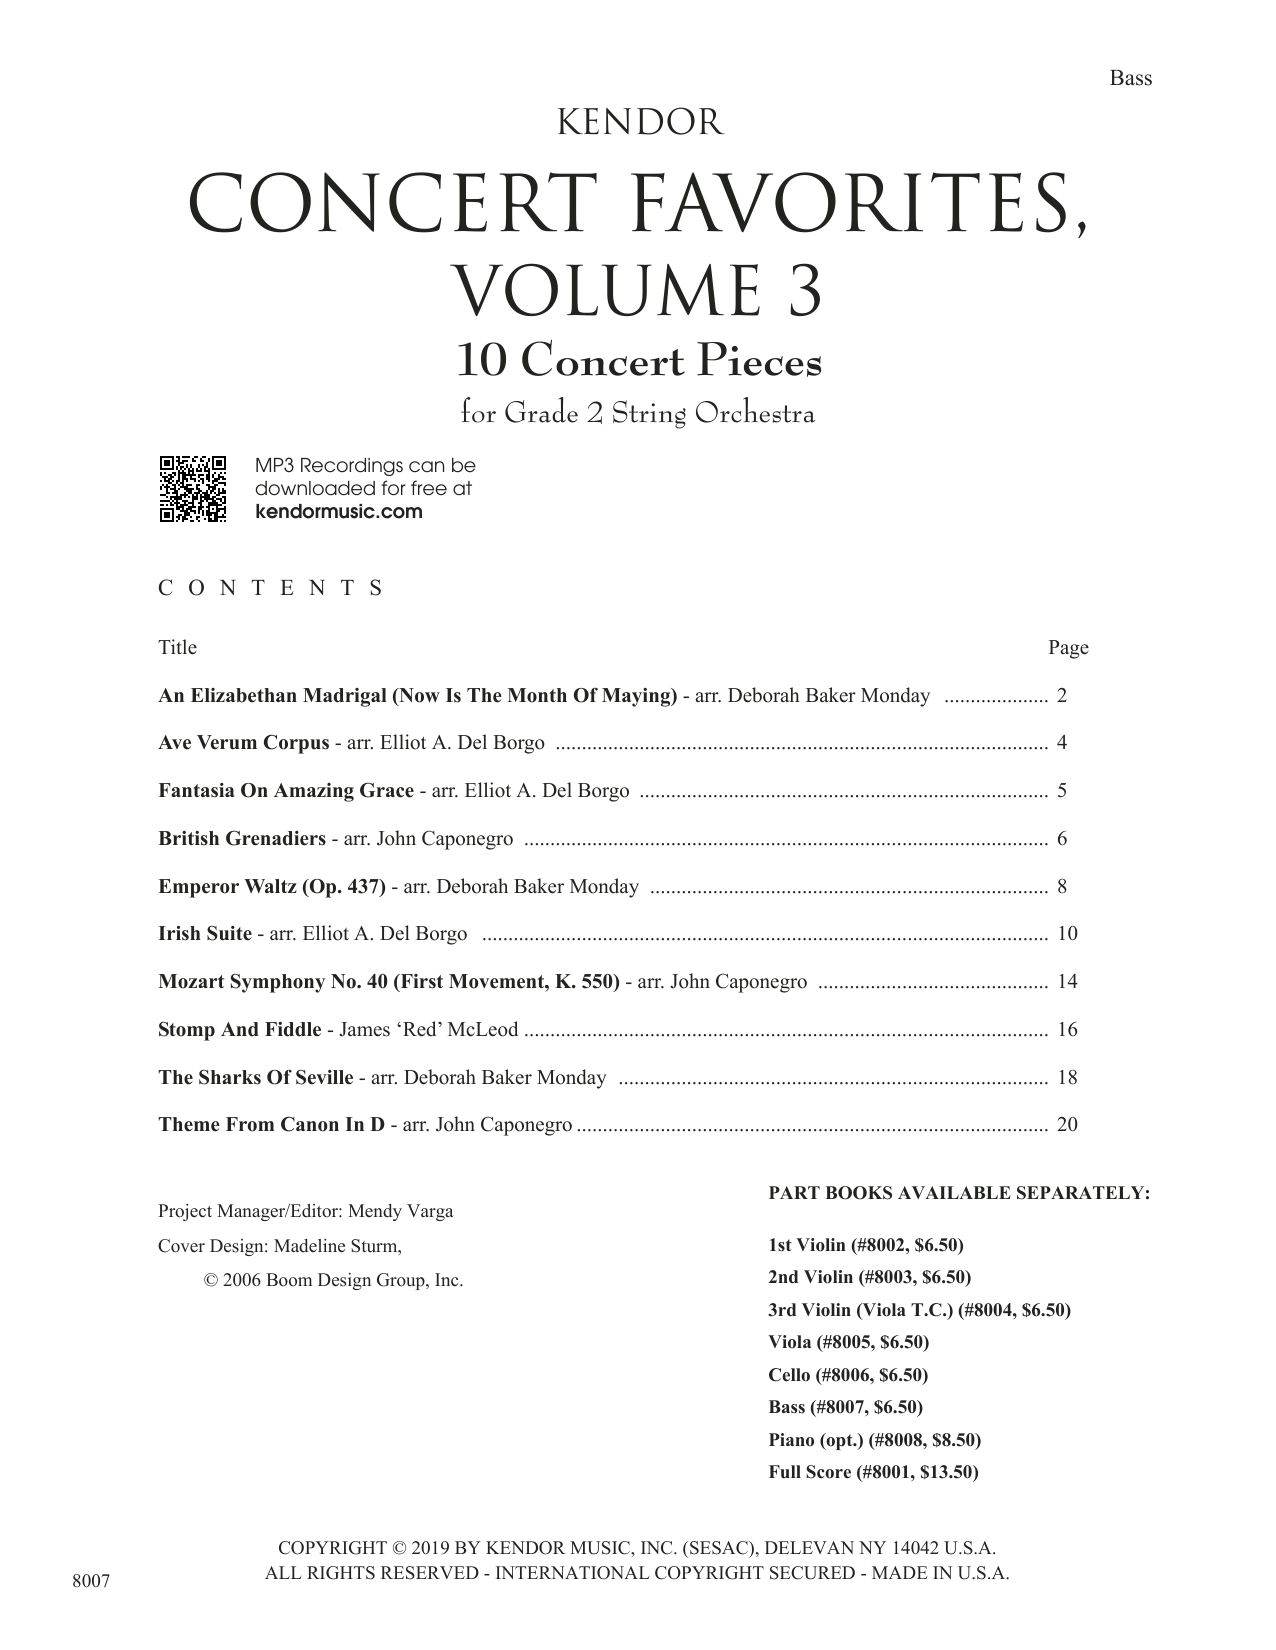 Download Various Kendor Concert Favorites, Volume 3 - Ba Sheet Music